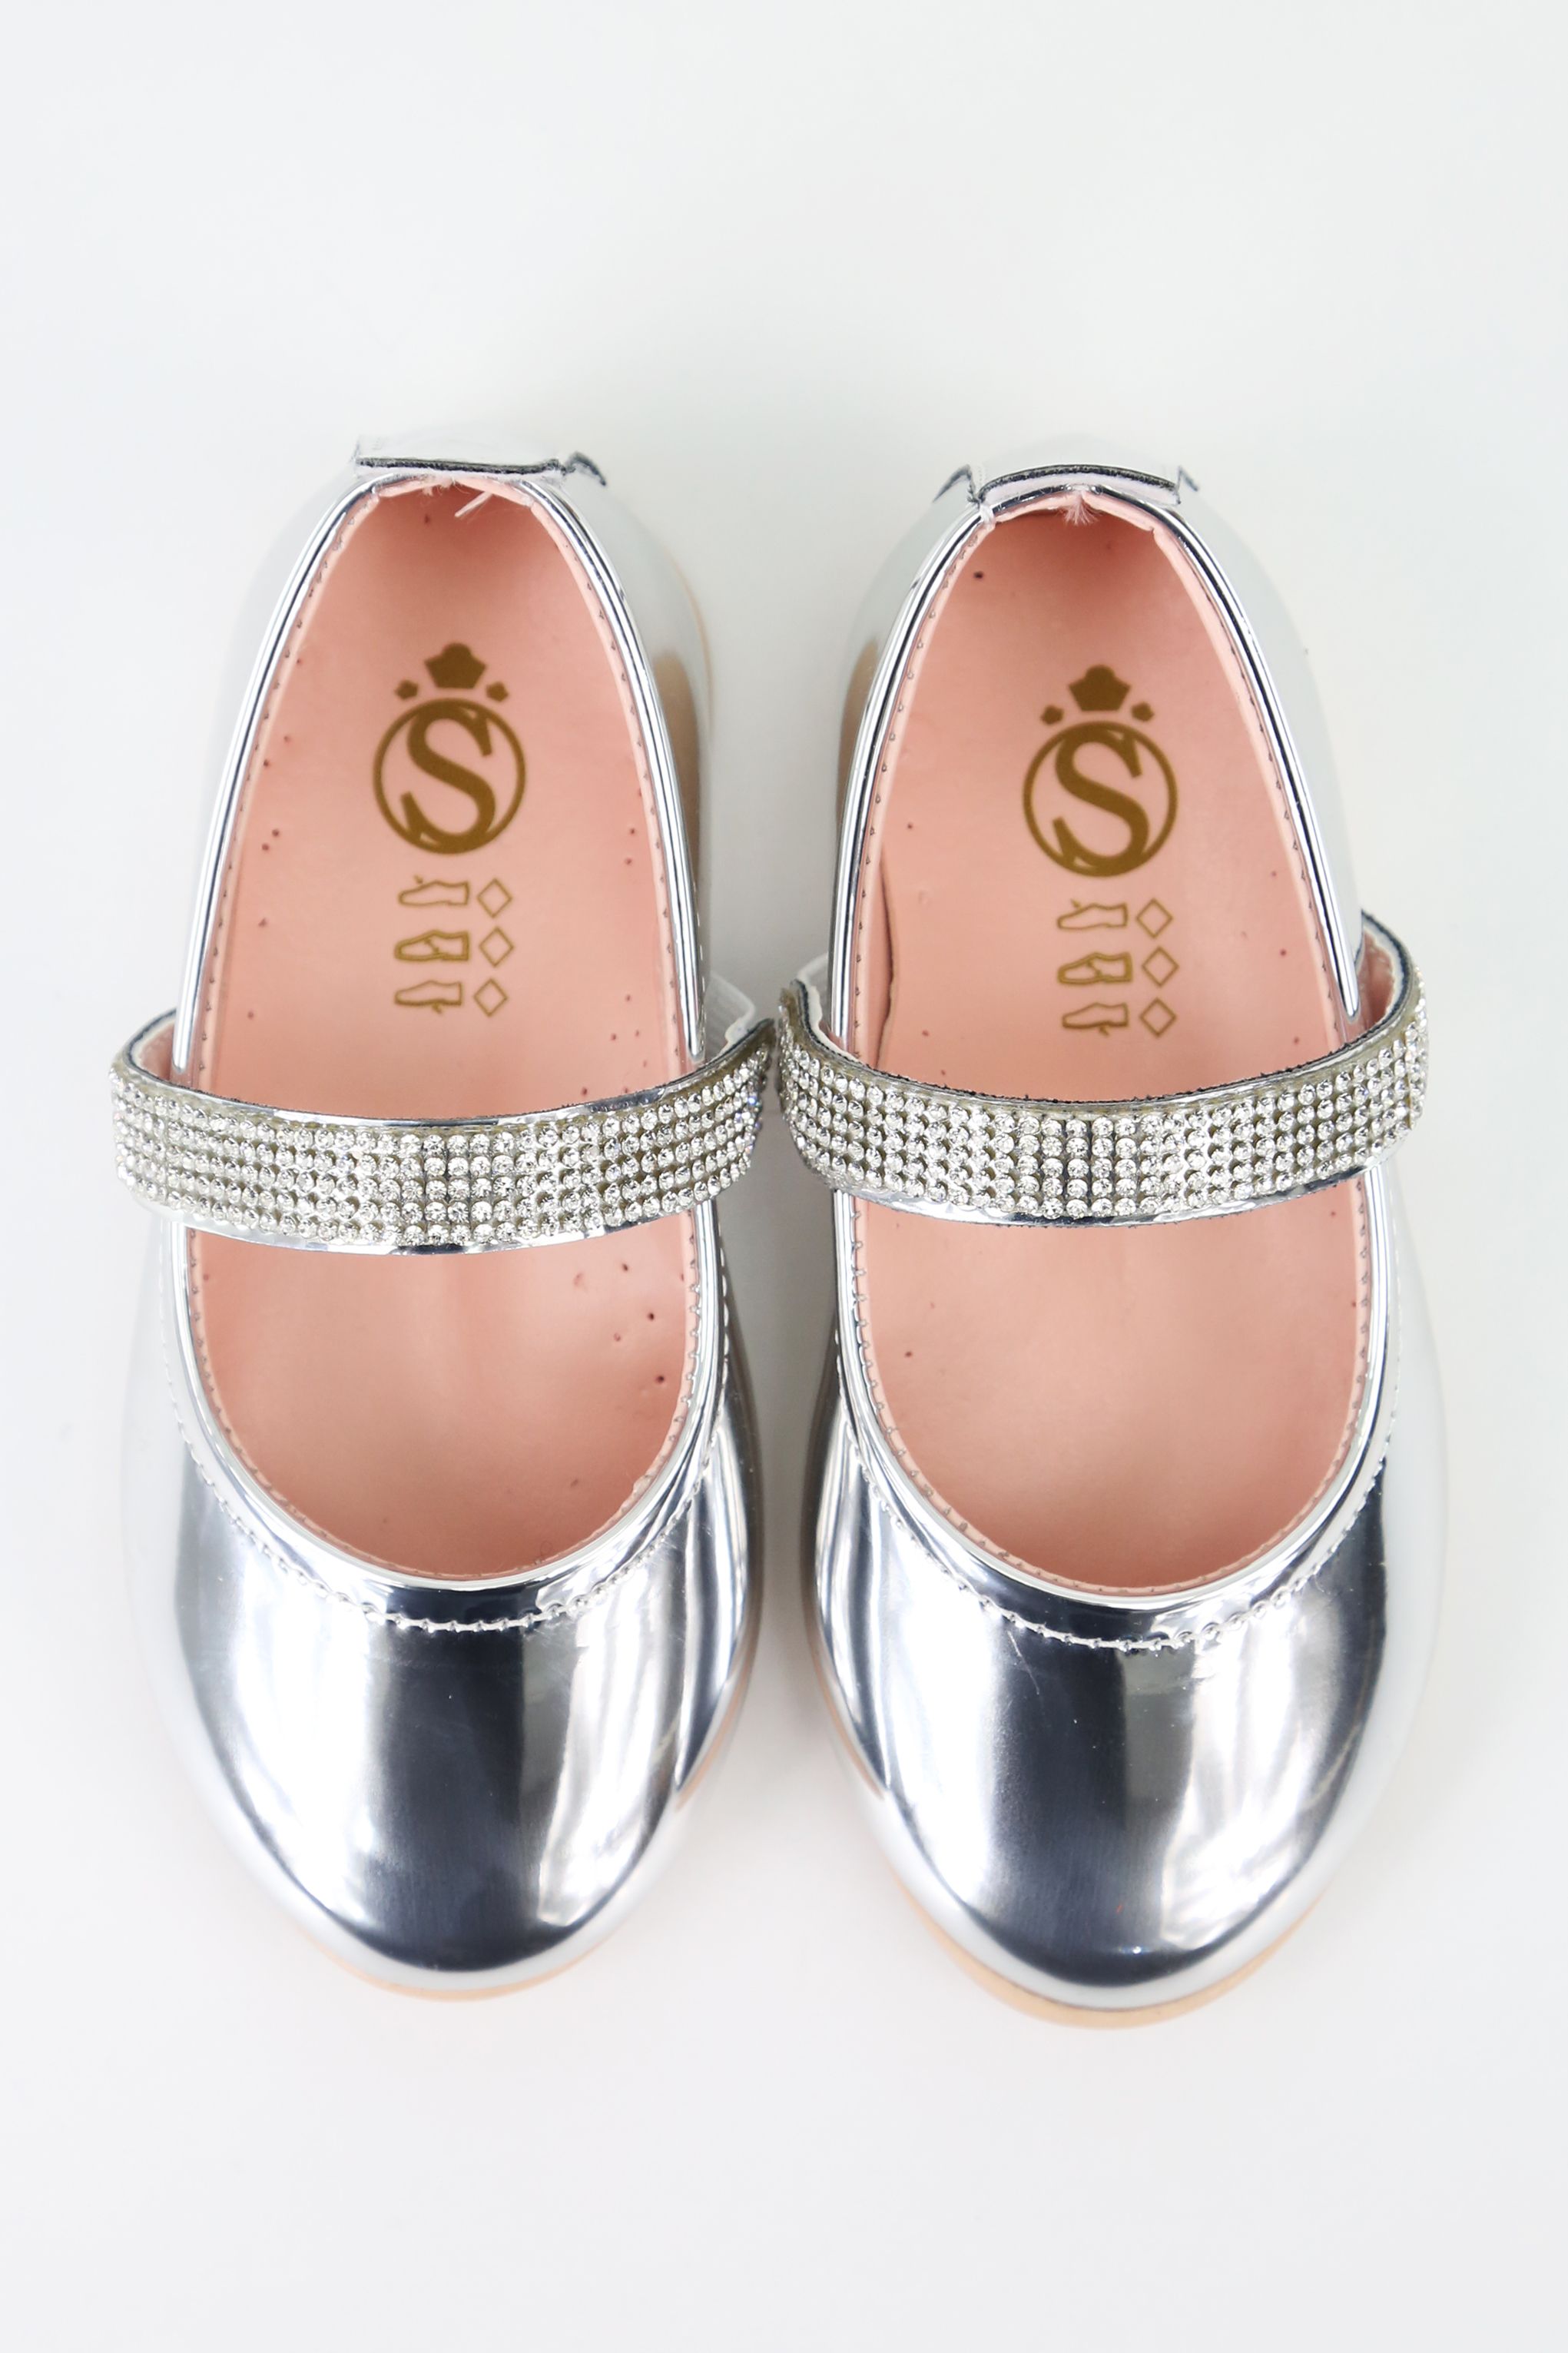 Girls Rhinestone Patent Mary Jane Shoes - ARWEN